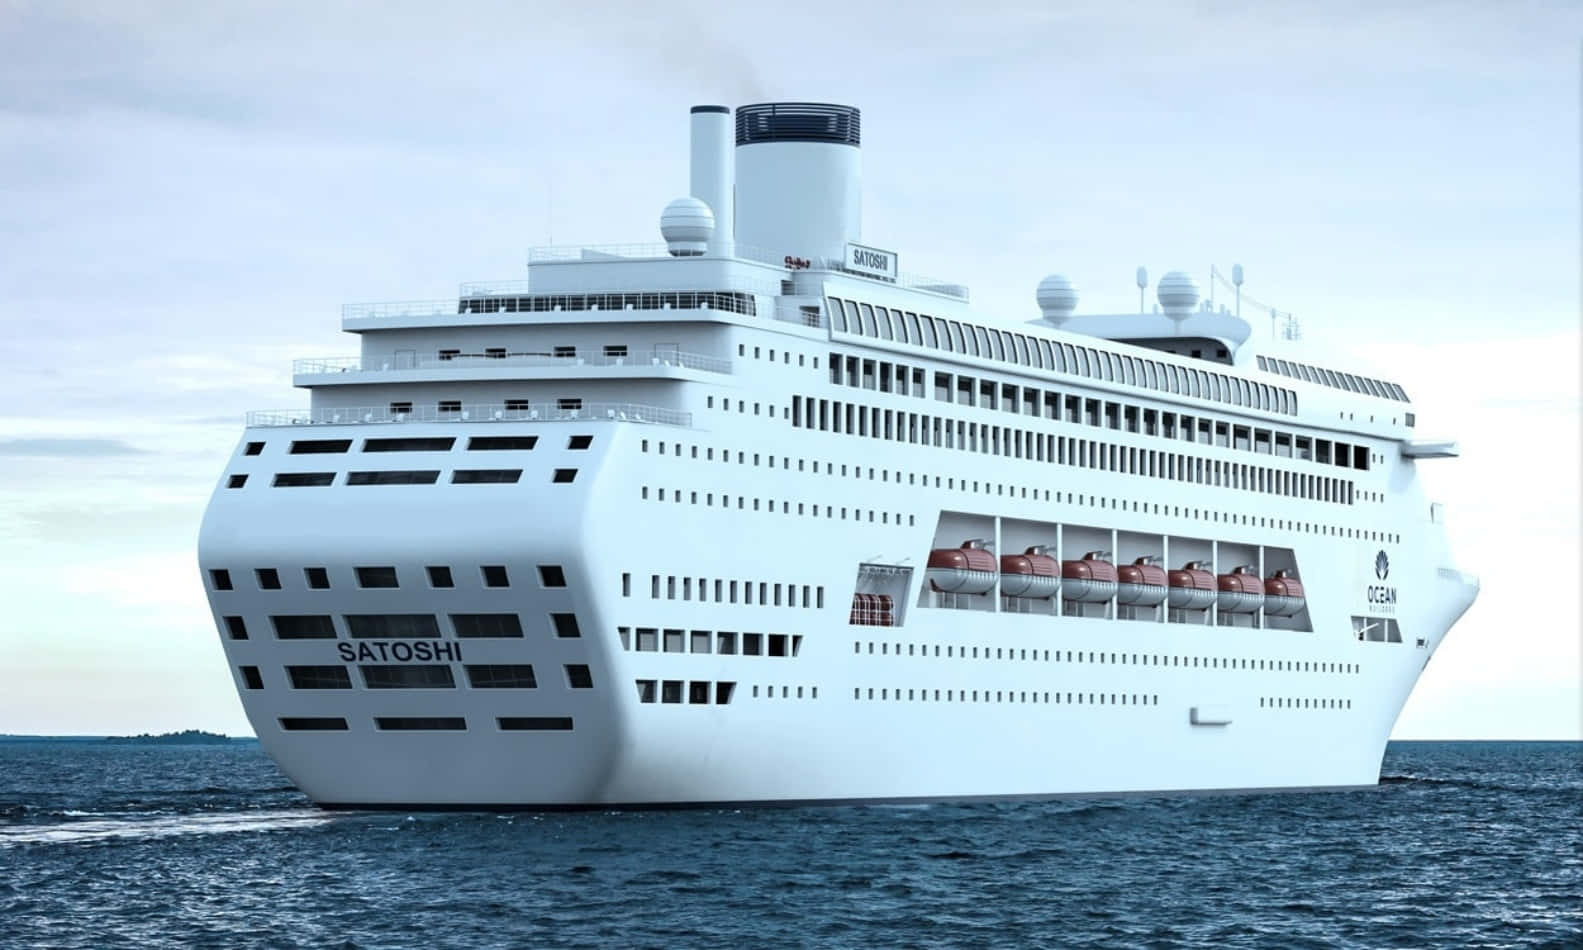 Take a cruise around the world aboard a classic ship